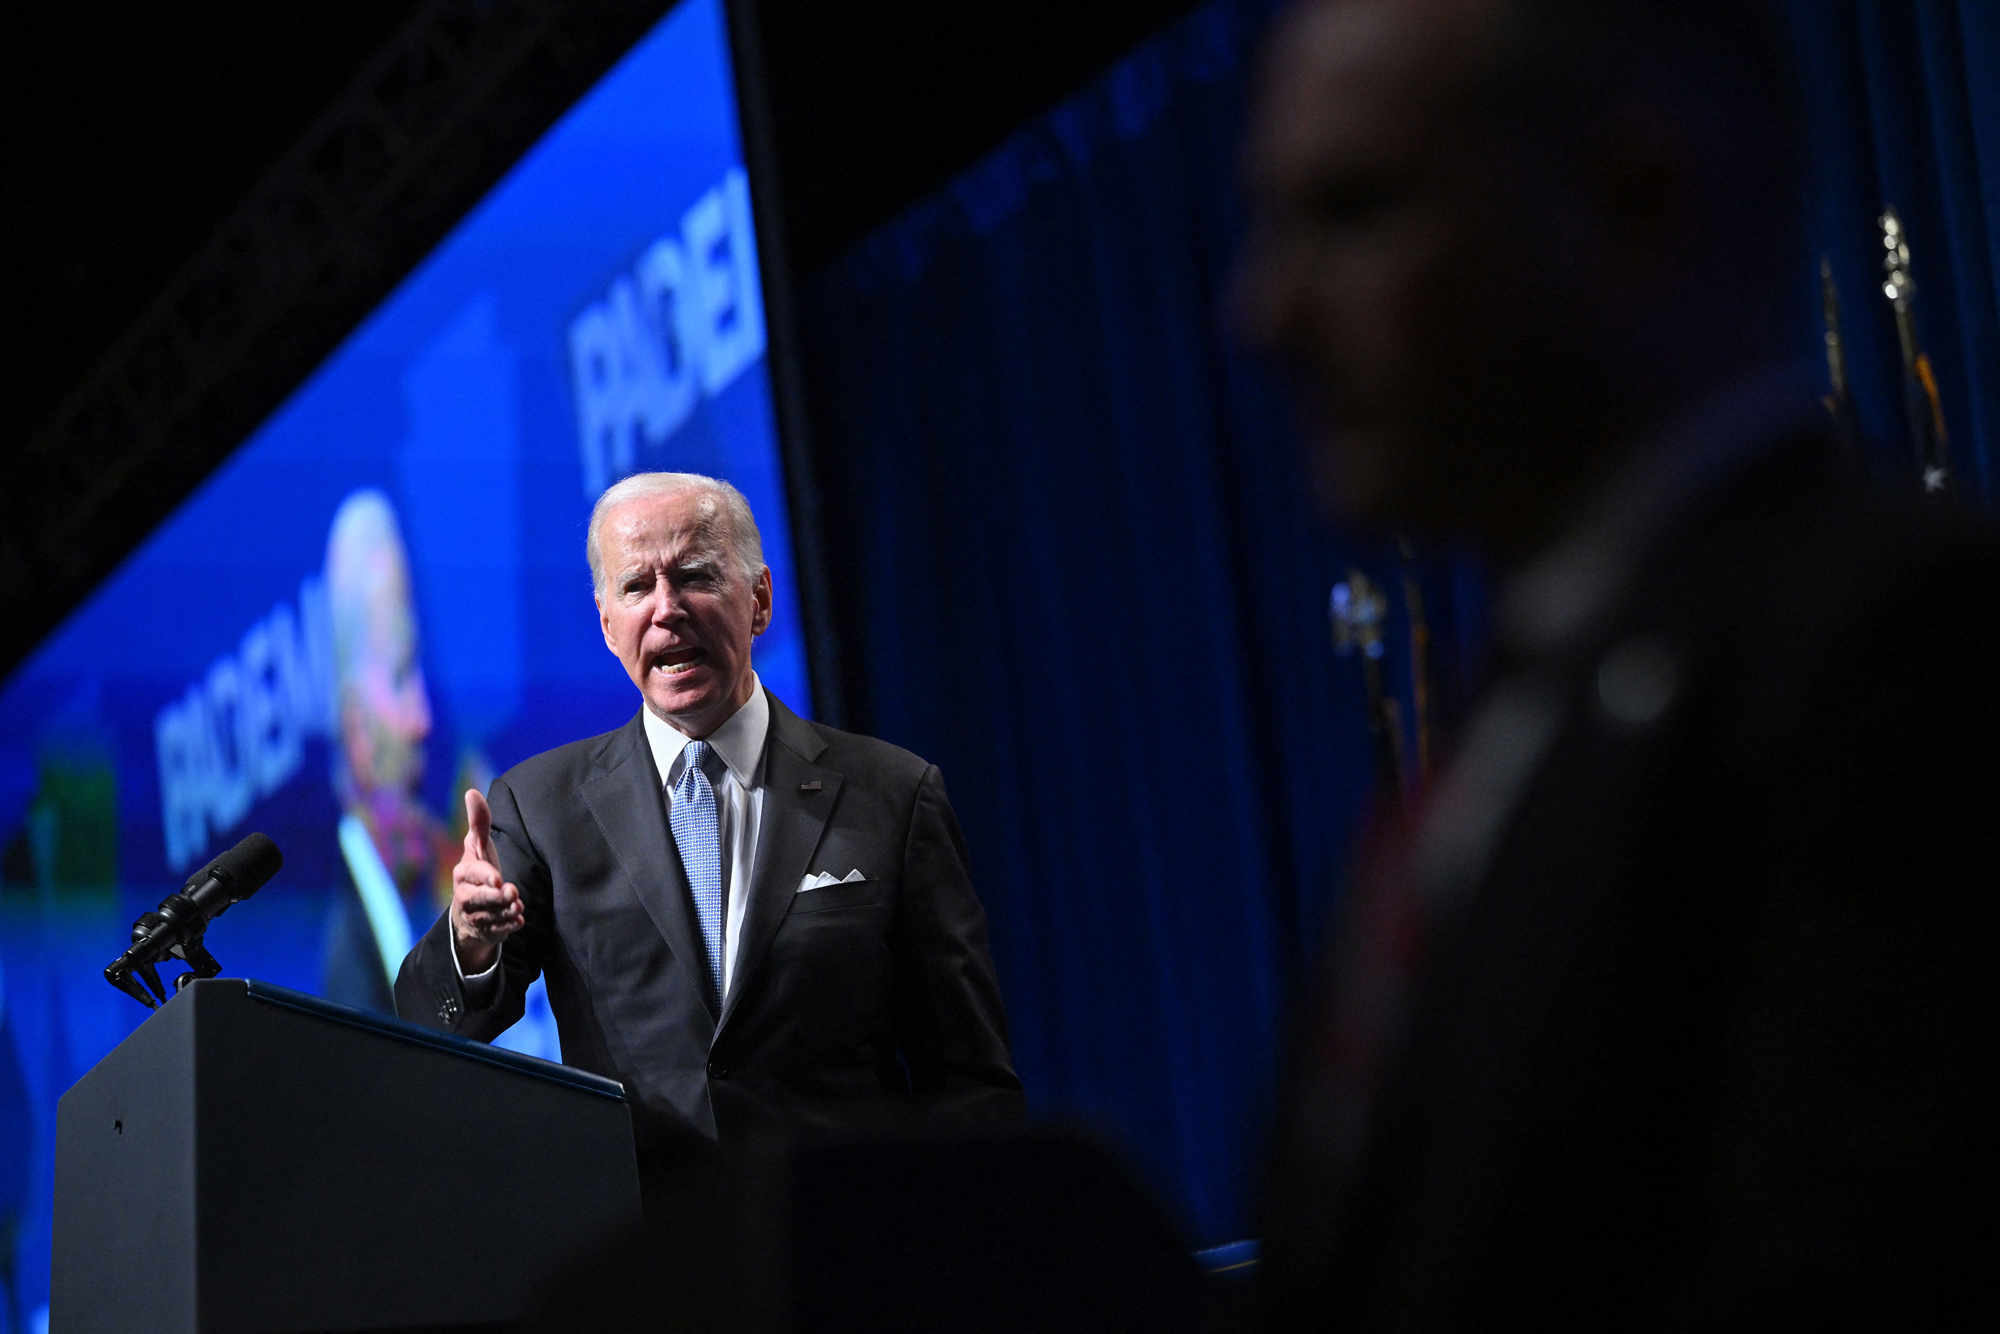 US President Joe Biden speaks at a reception for the Pennsylvania Democratic Party in Philadelphia on Friday.